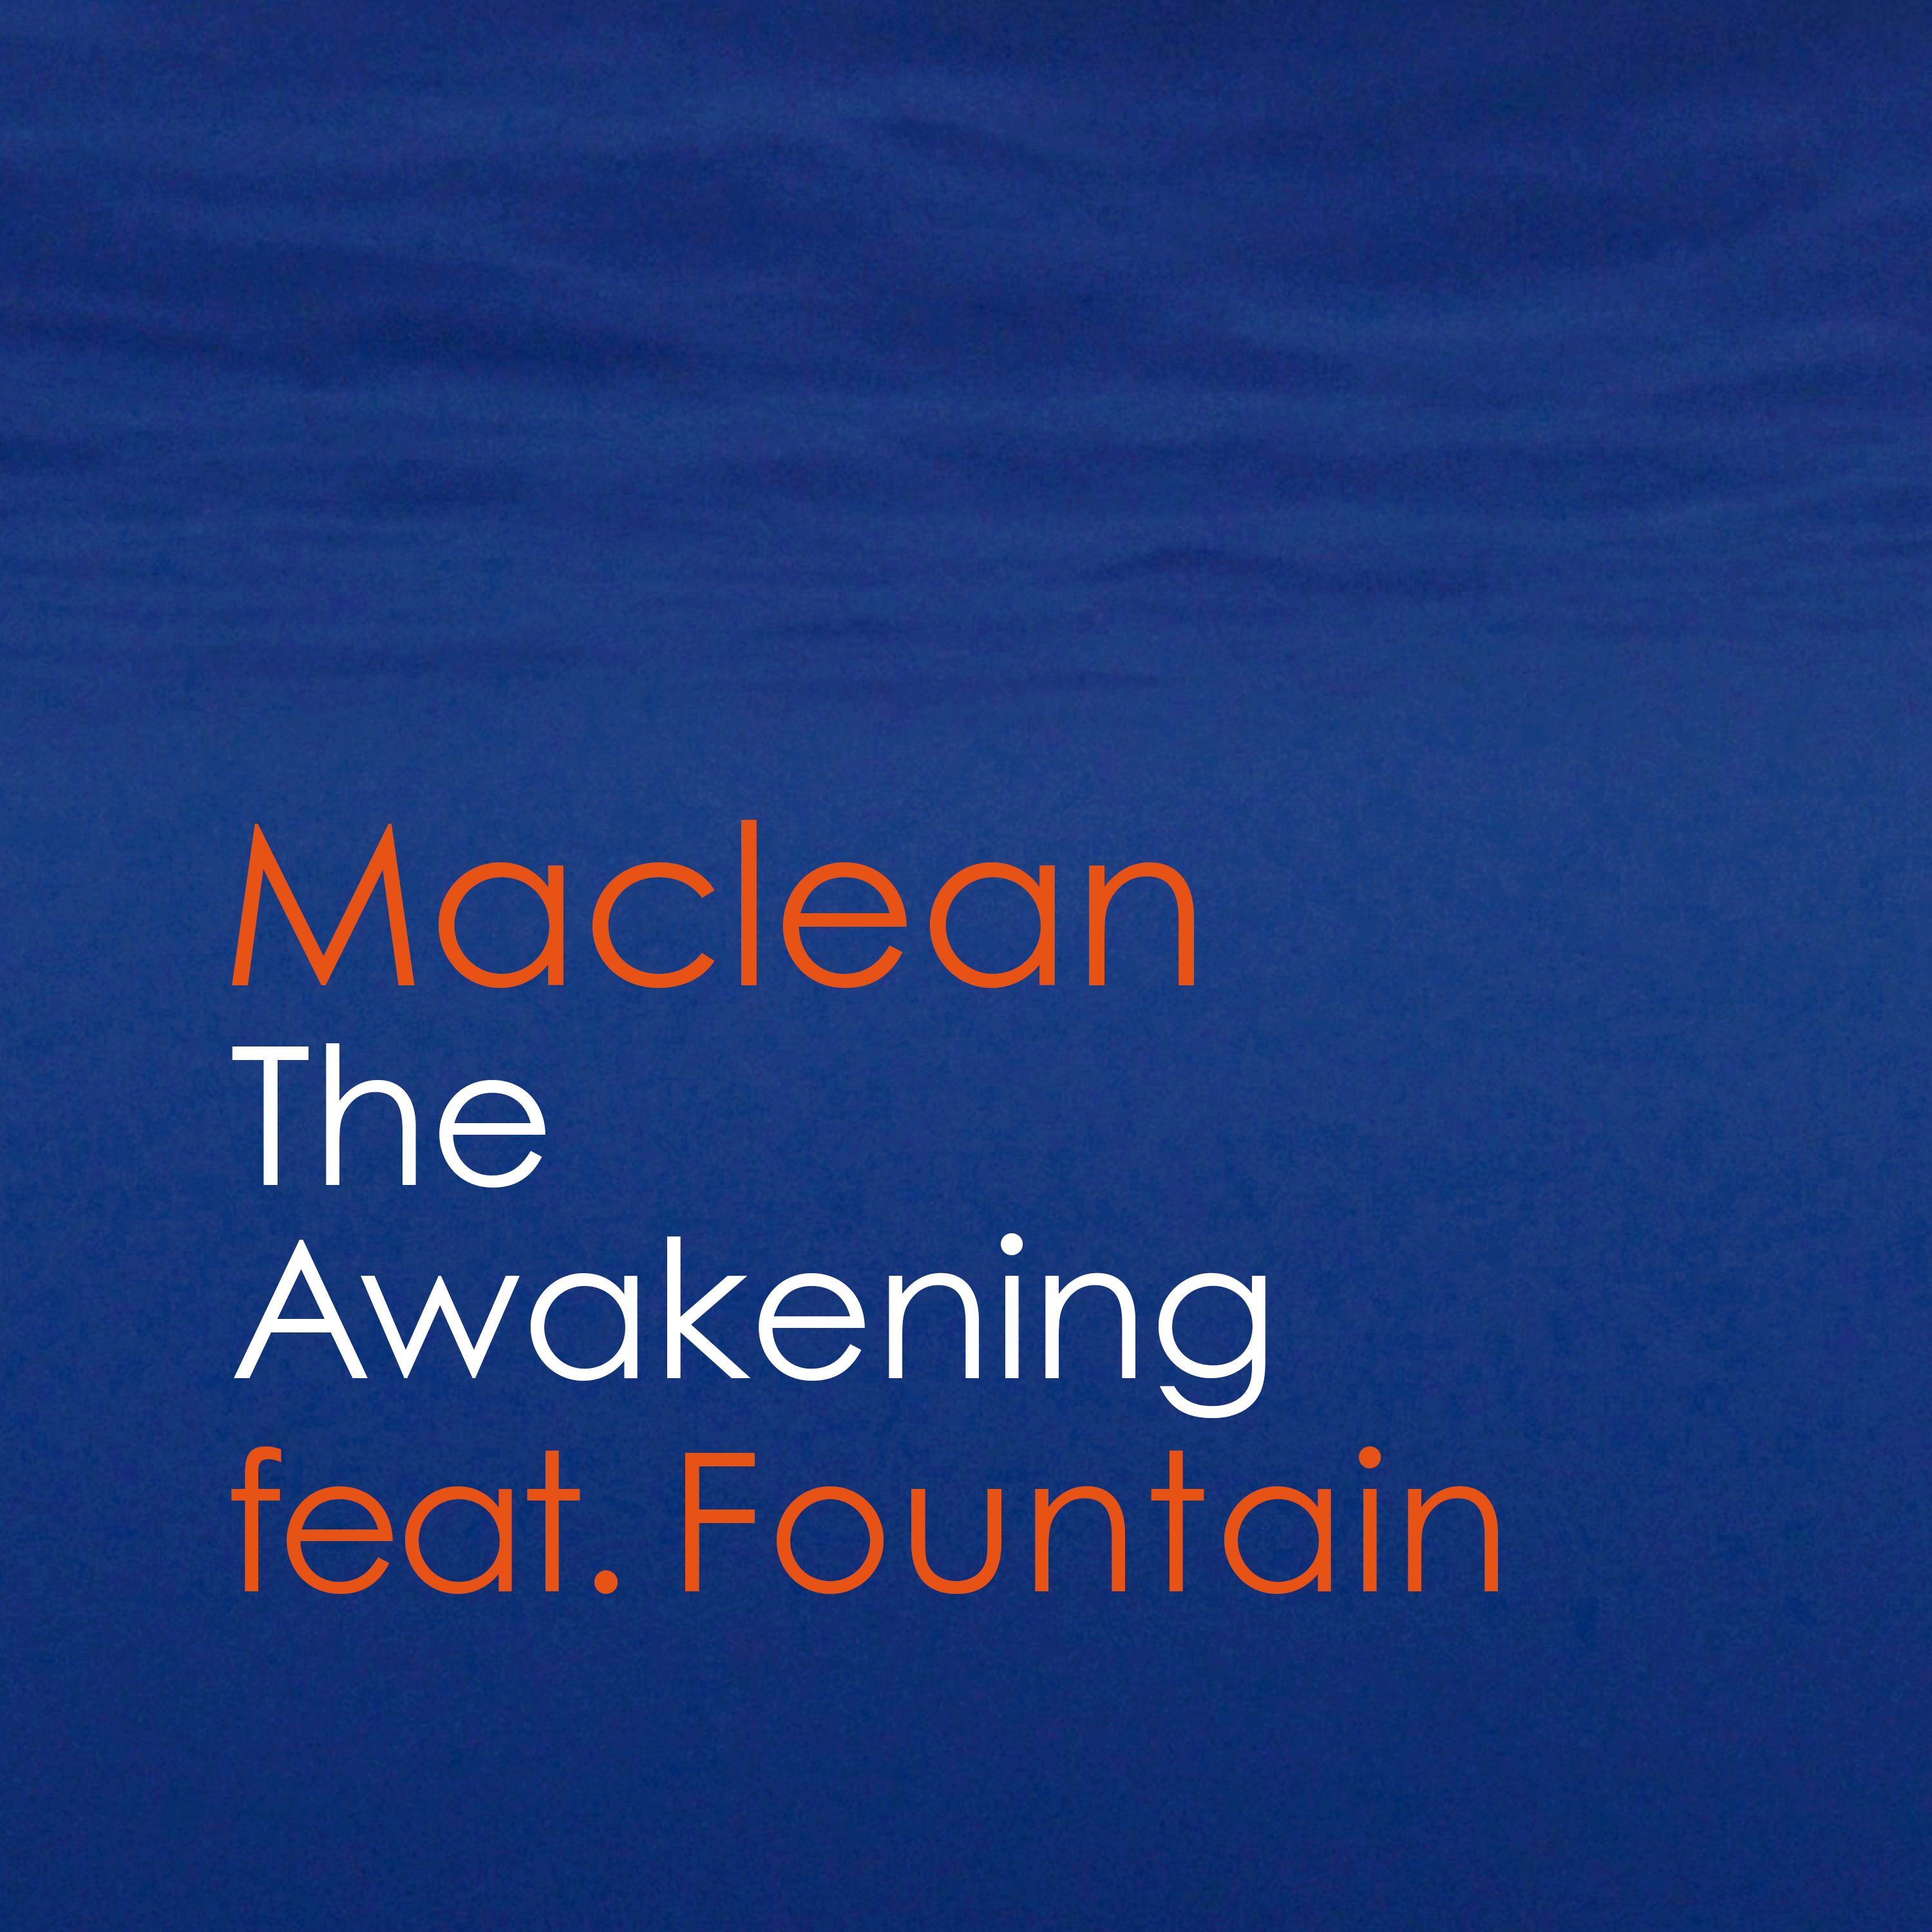 Maclean_The_Awakening_Feat_Fountain